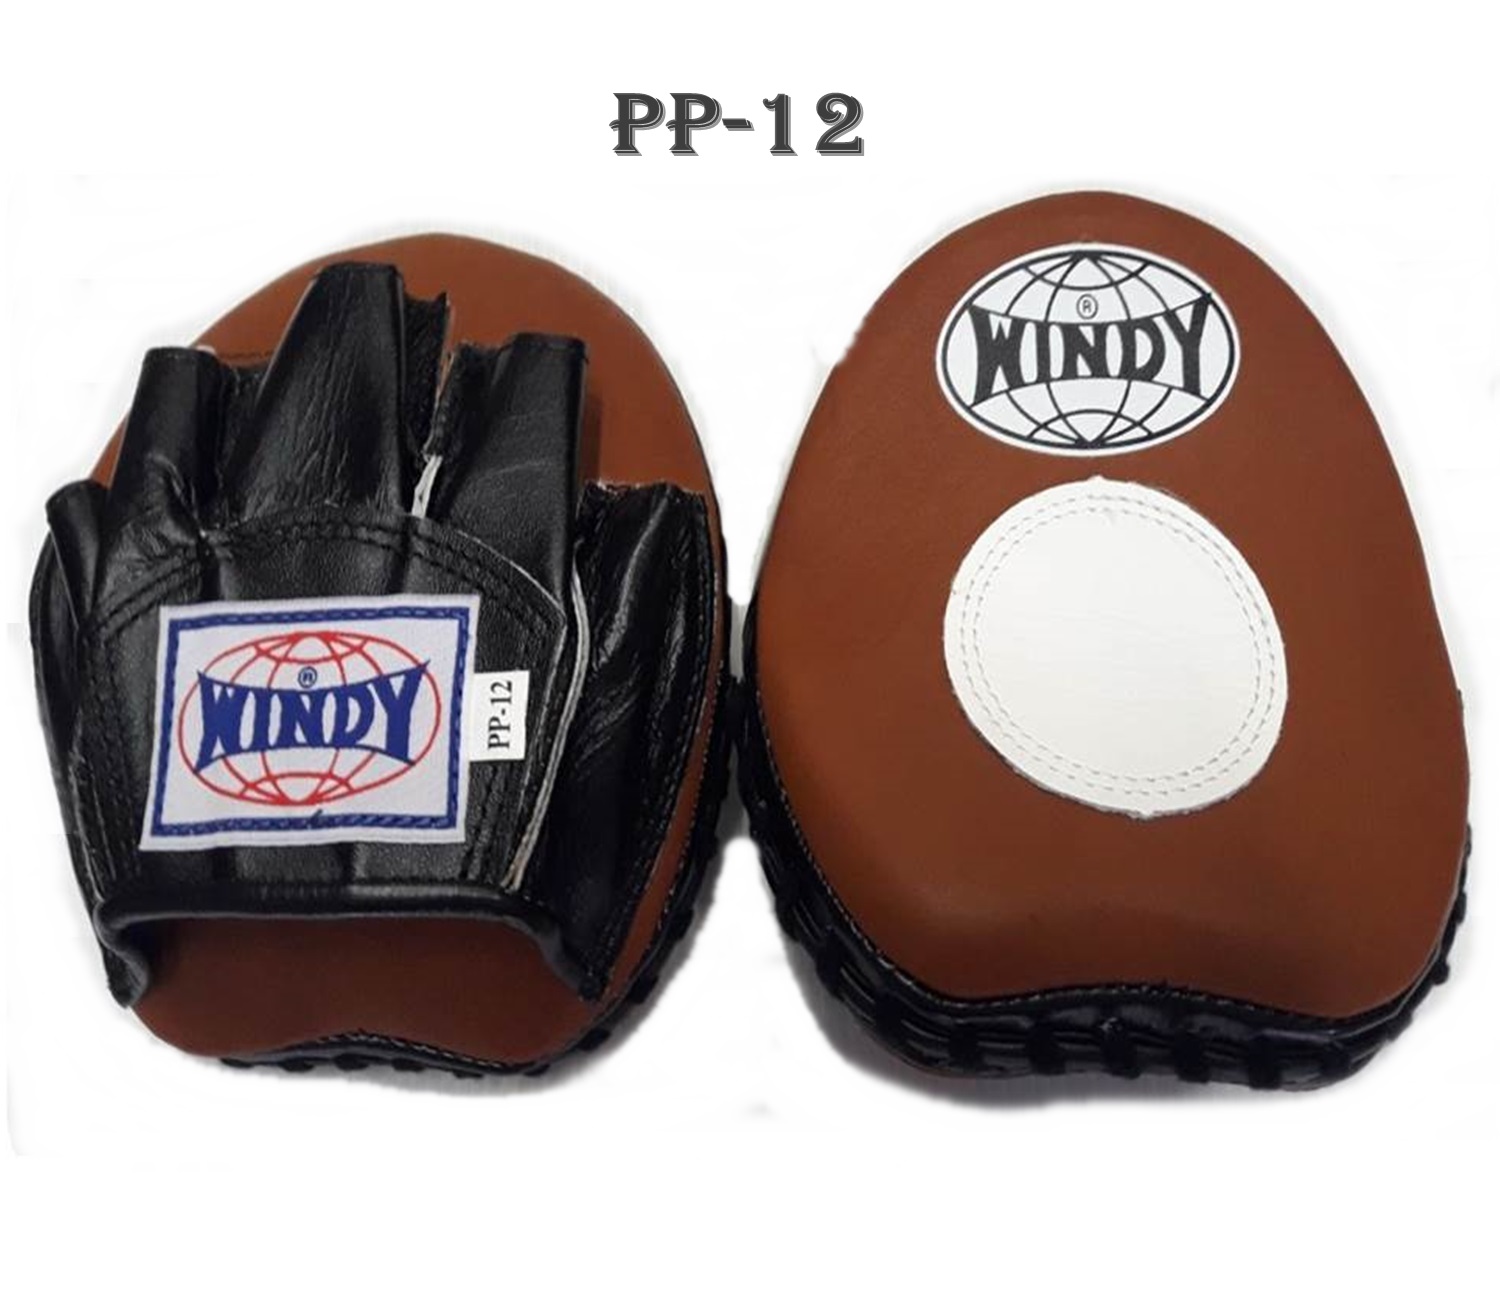 Windy focus mitts Punching PP-12 Brown small Genuine leather for Training Muay Thai MMA K1 เป้ามือวินดี้ เล็ก แบบโค้ง สีน้ำตาล หนังแท้ สำหรับเทรนเนอร์ ในการฝึกซ้อมนักมวย